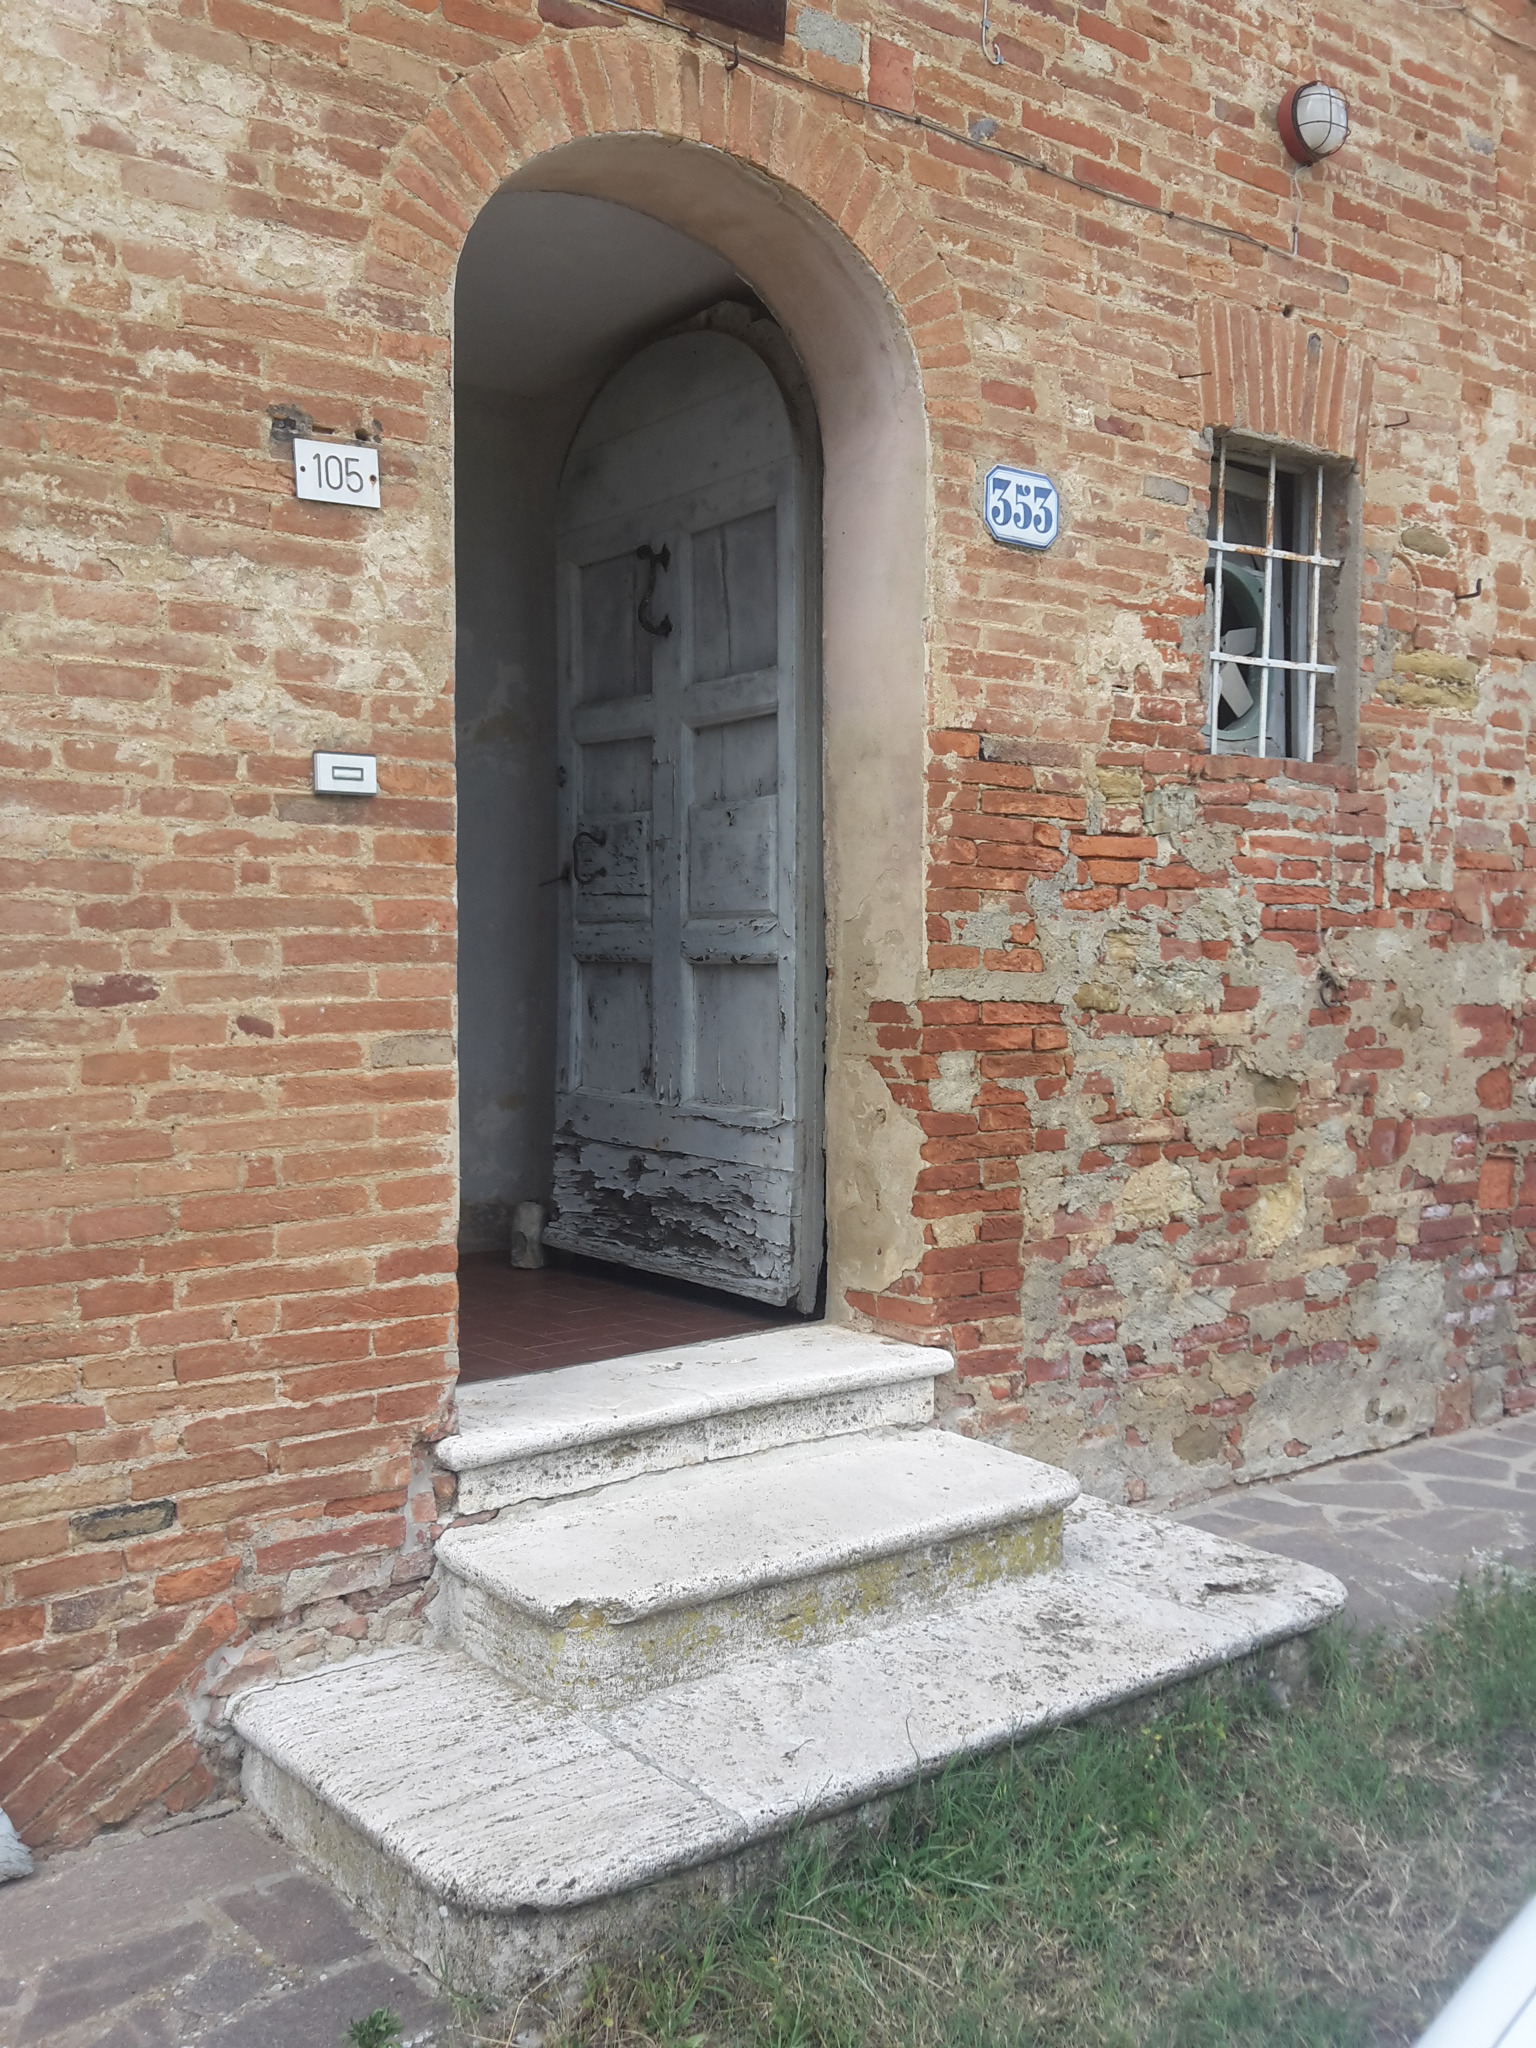 Casale in Toscana, porta d'ingresso, settembre 2020